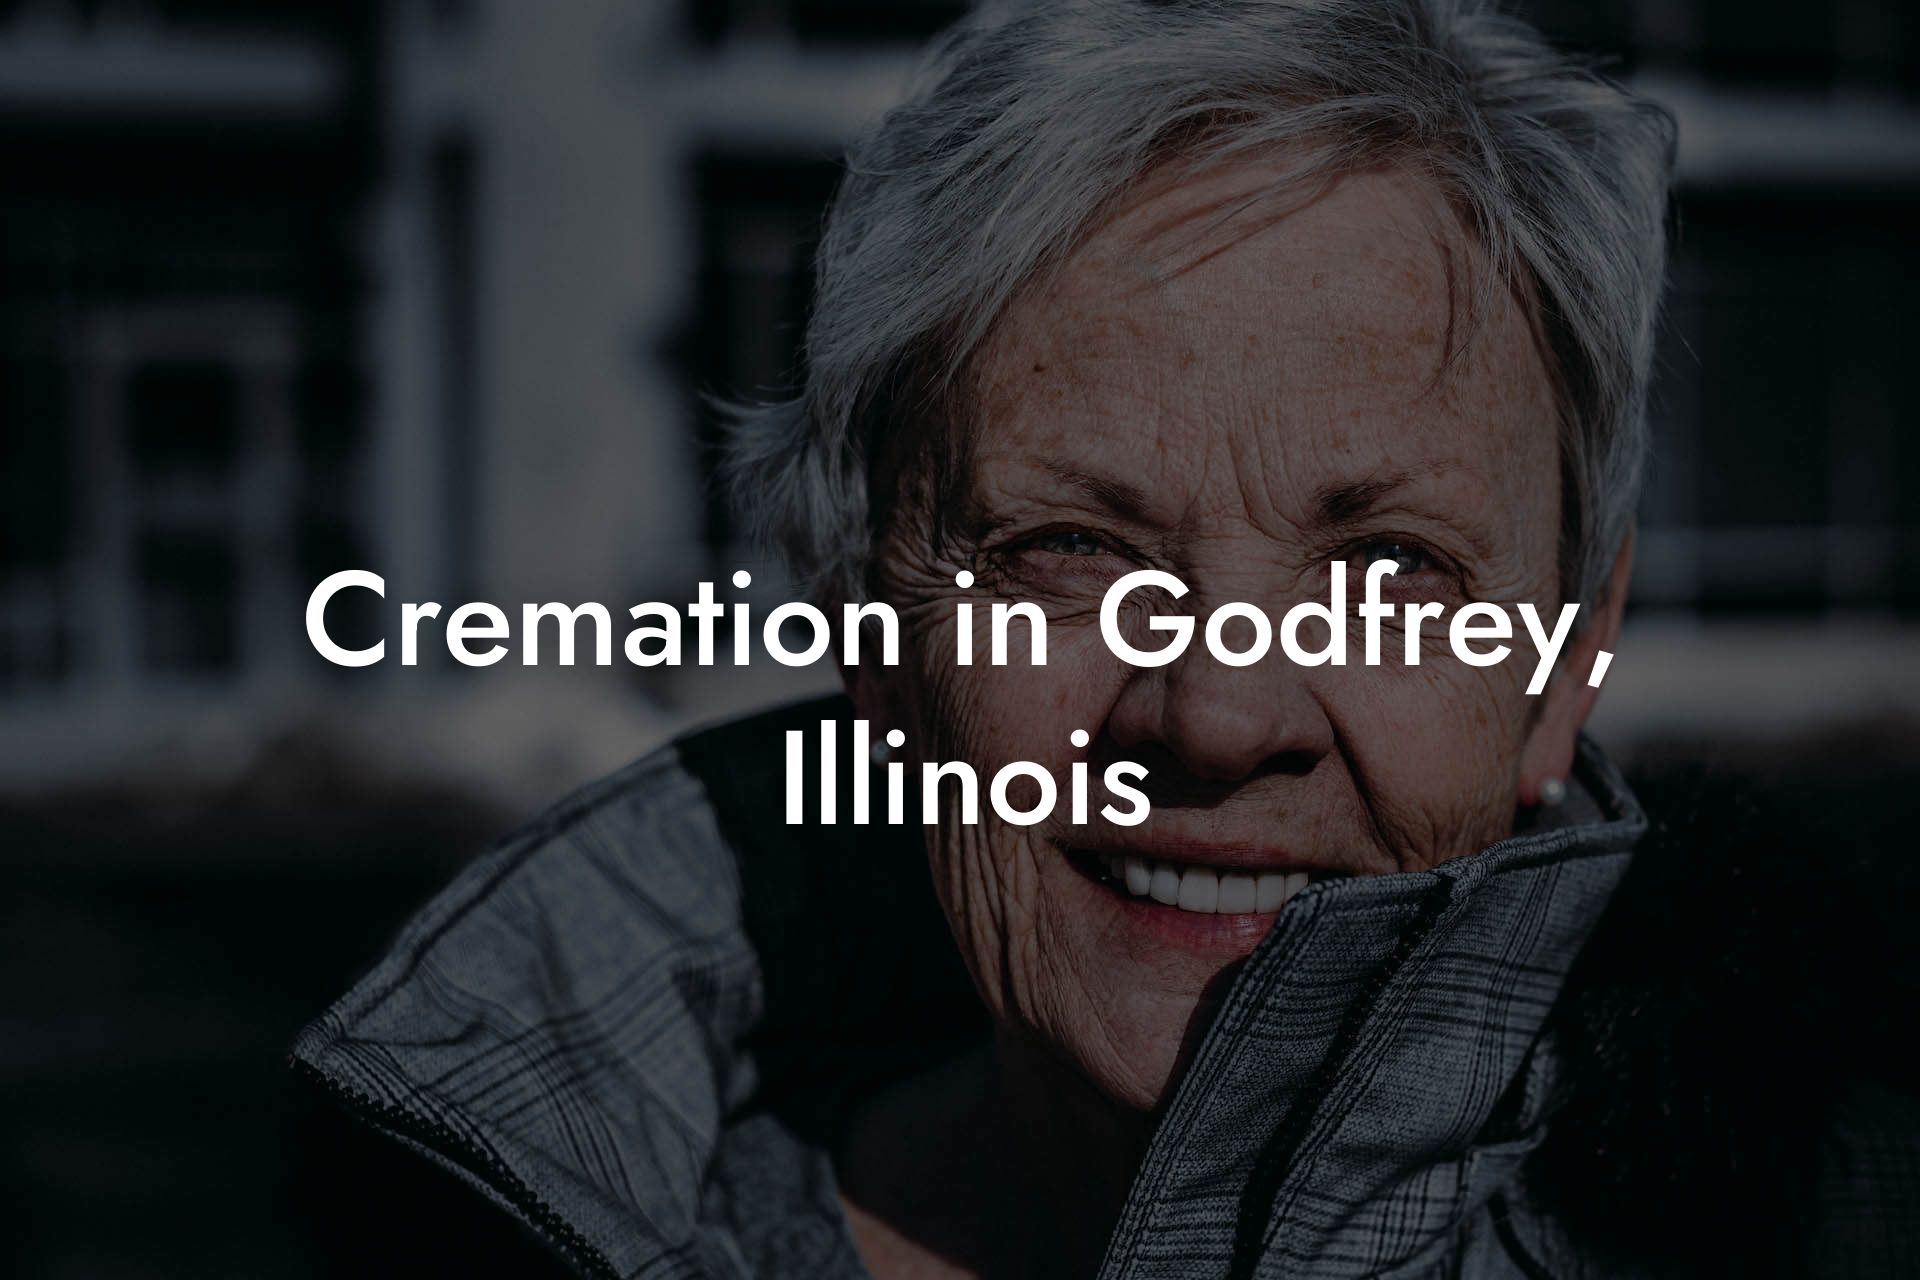 Cremation in Godfrey, Illinois